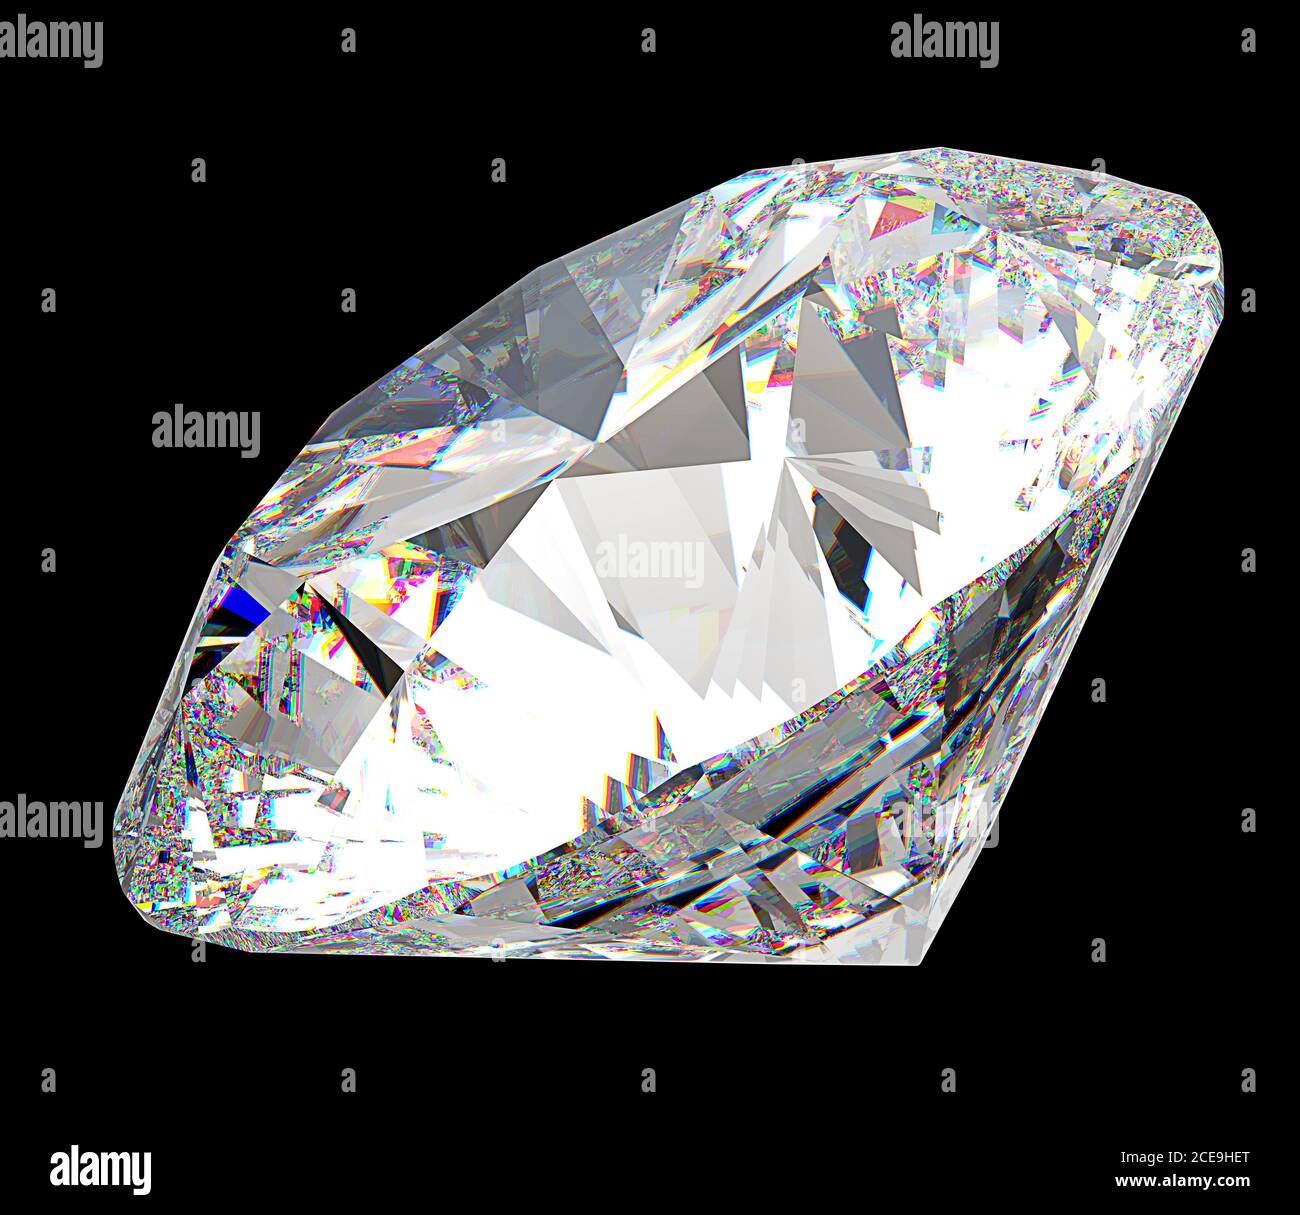 Edelstein: Großer Diamant über schwarz Stockfotografie - Alamy